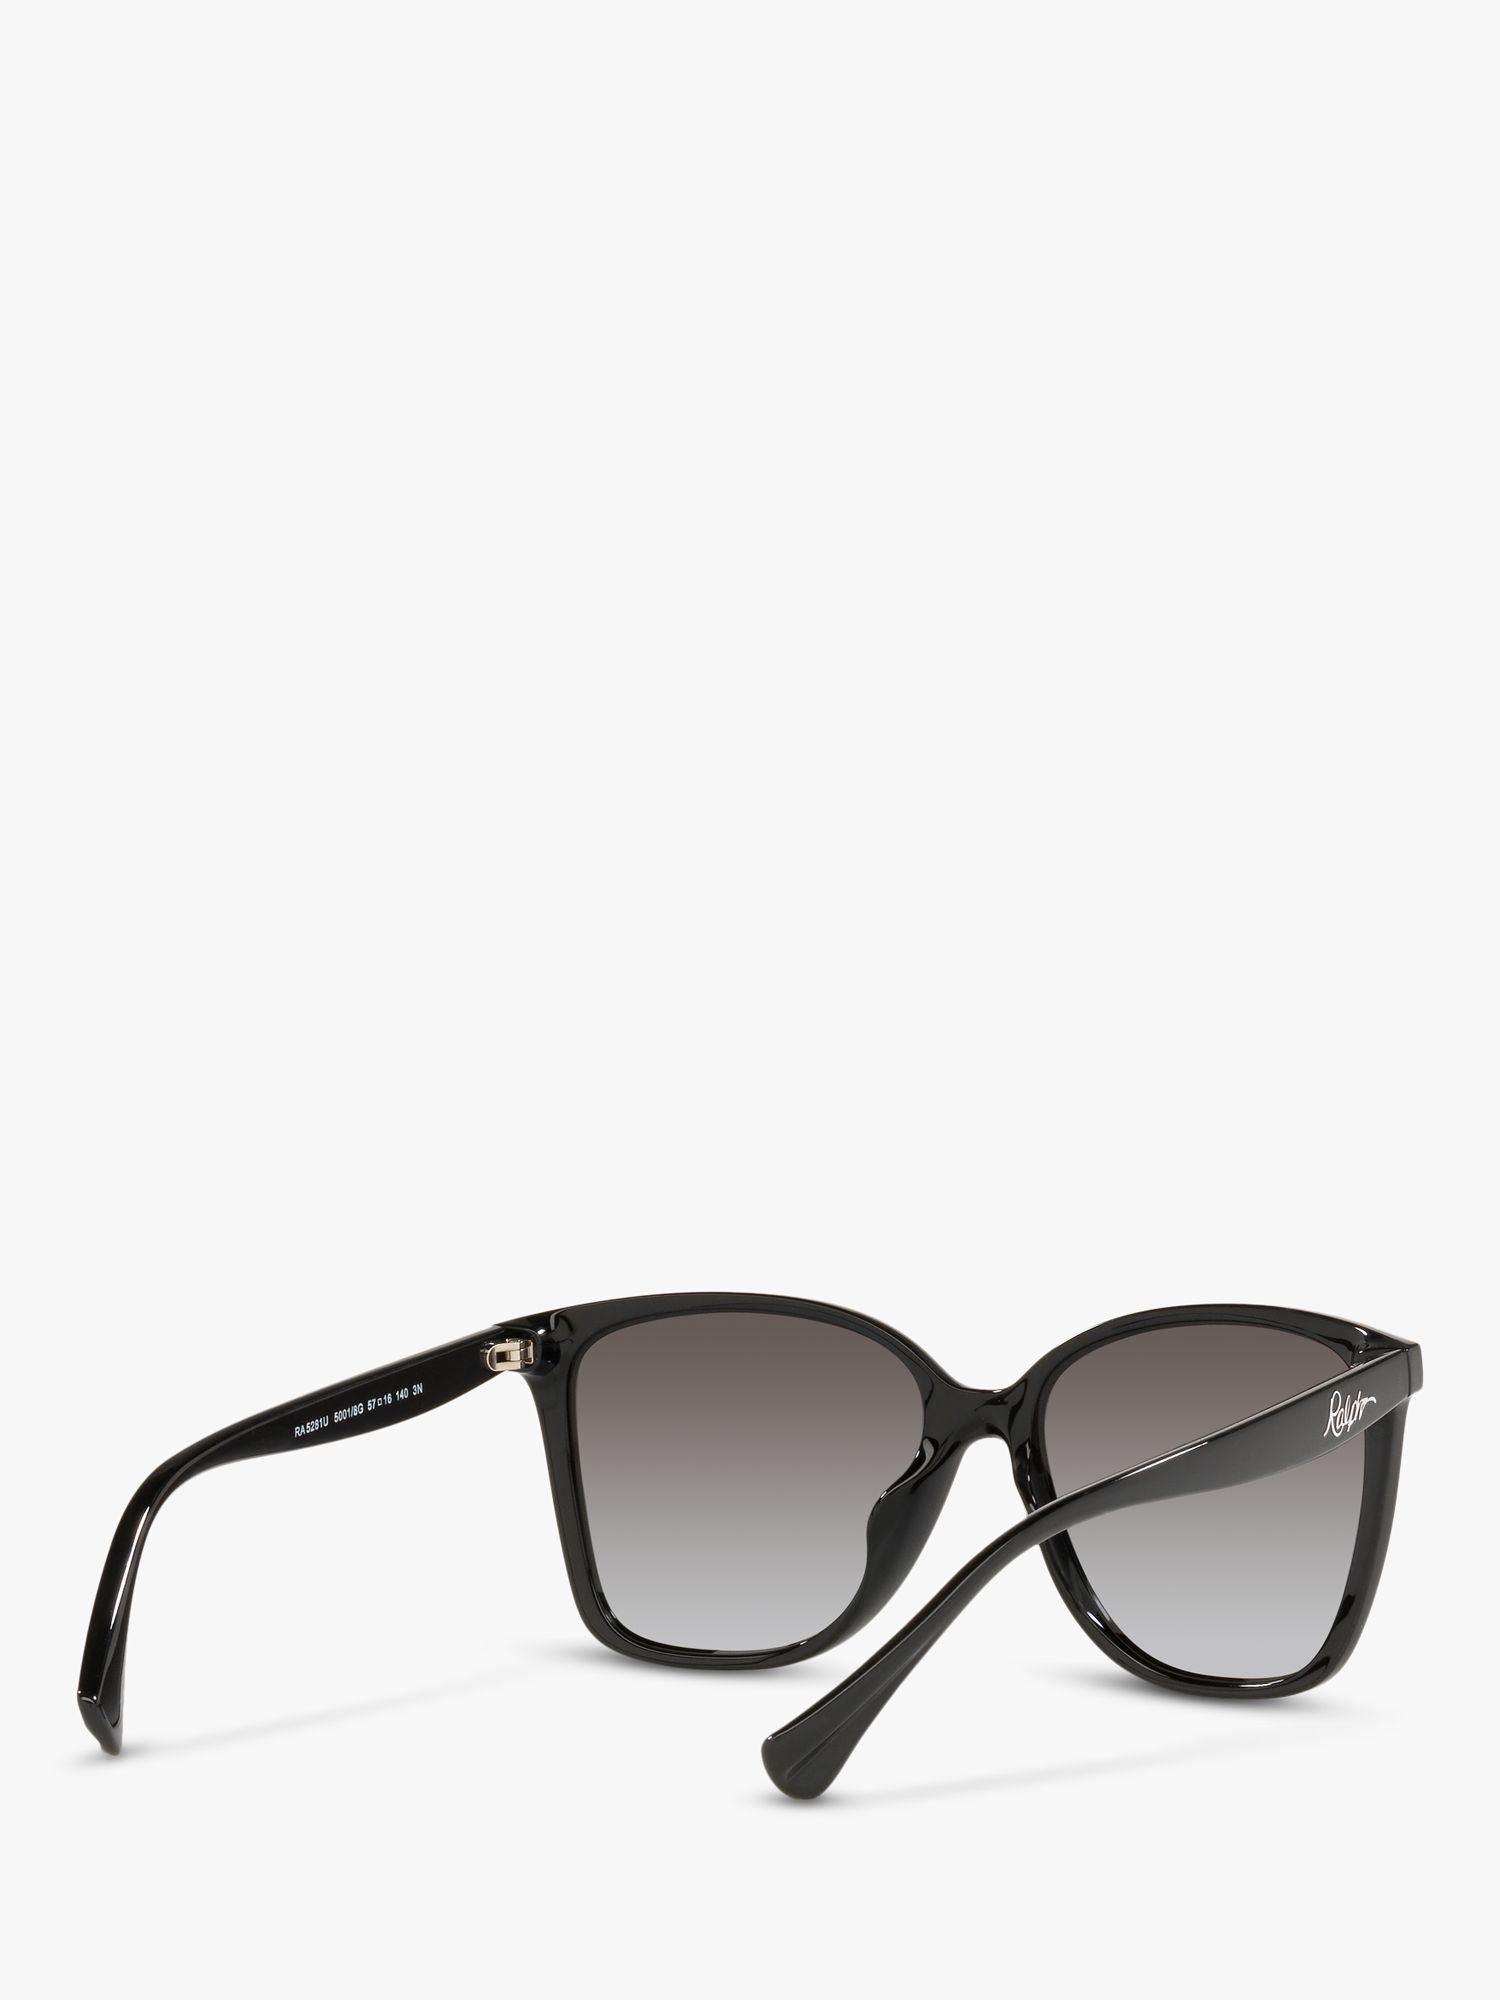 Ralph RA5281U Women's Square Sunglasses, Shiny Black/Grey Gradient